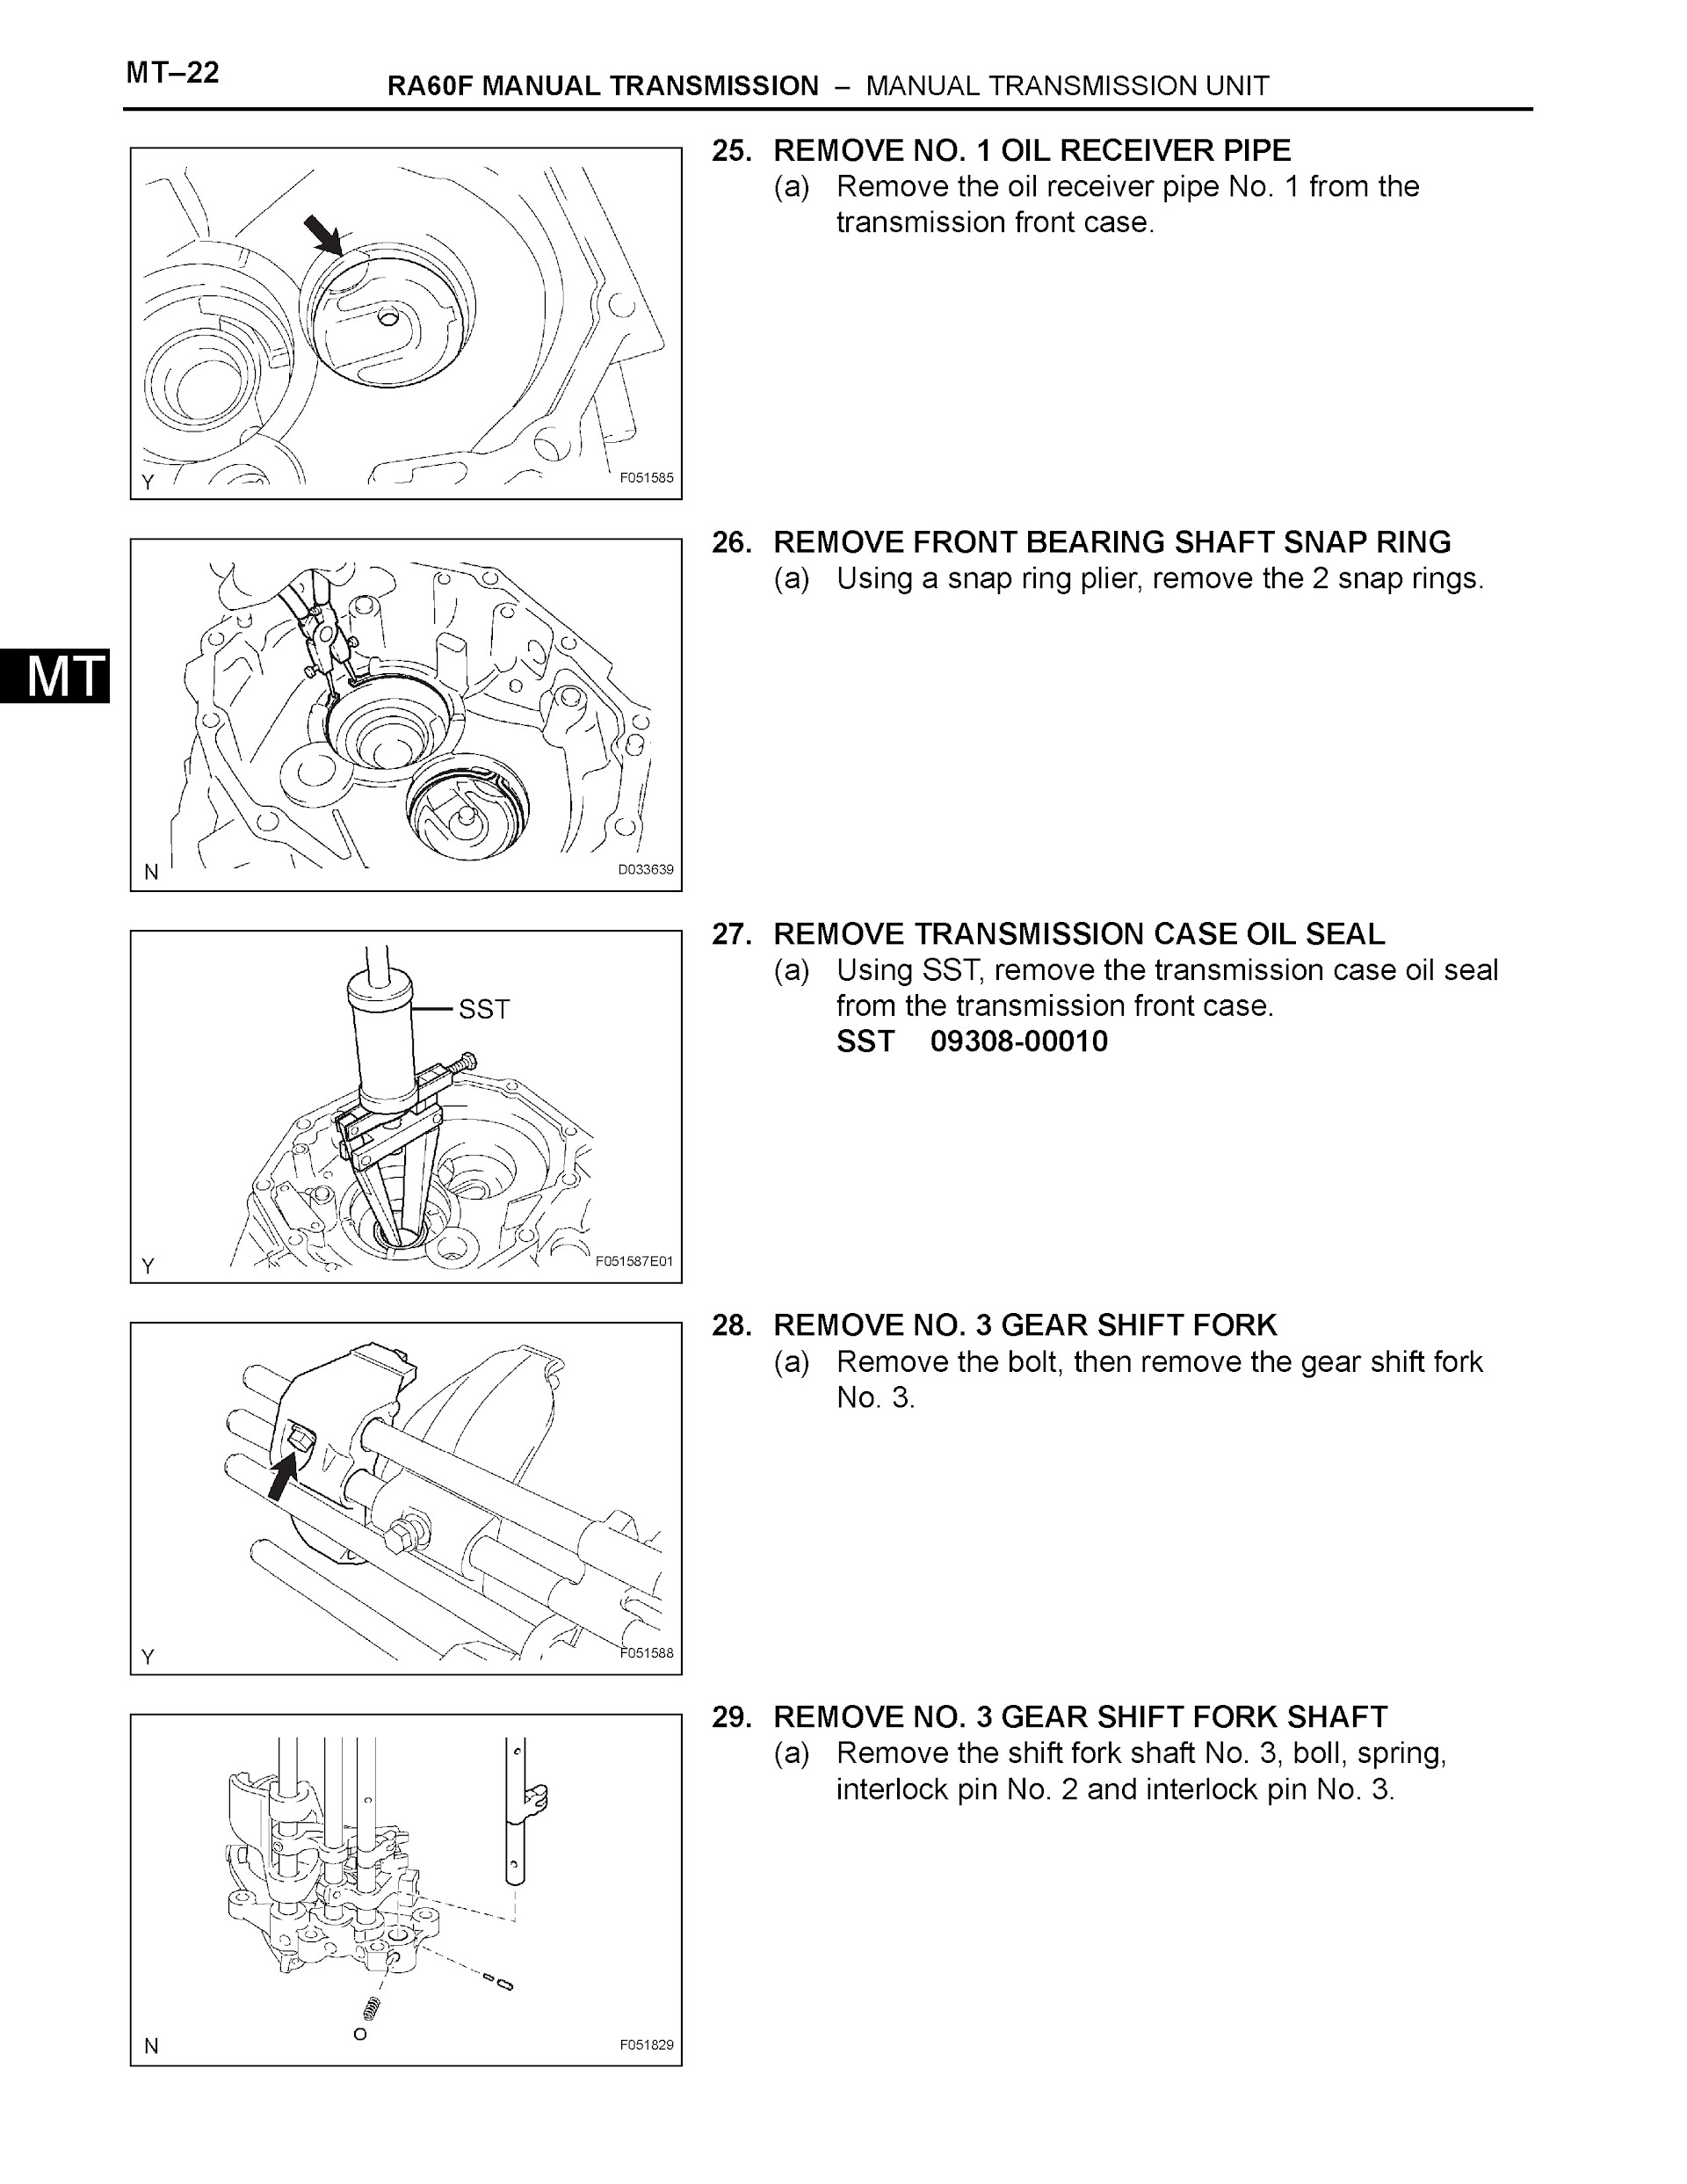 2008 Toyota Tacoma Repair Manual, RA60F Manual Tranmission